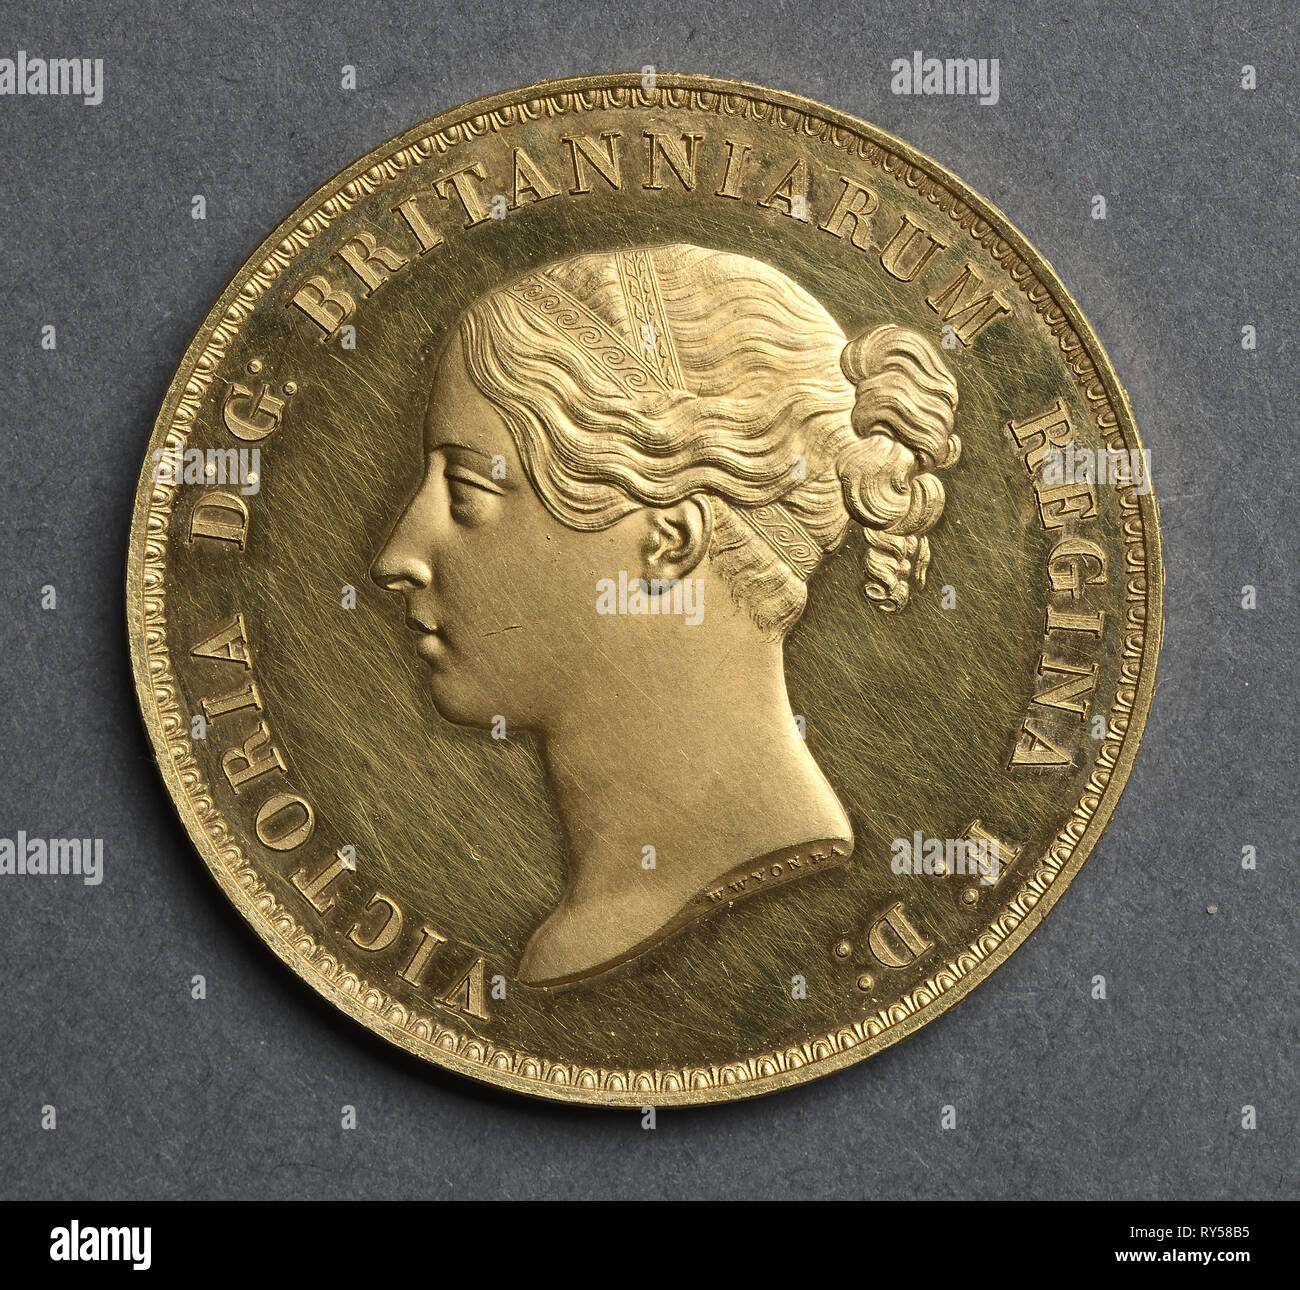 Five Pounds (obverse), 1839. William Wyon (British). Gold Stock Photo